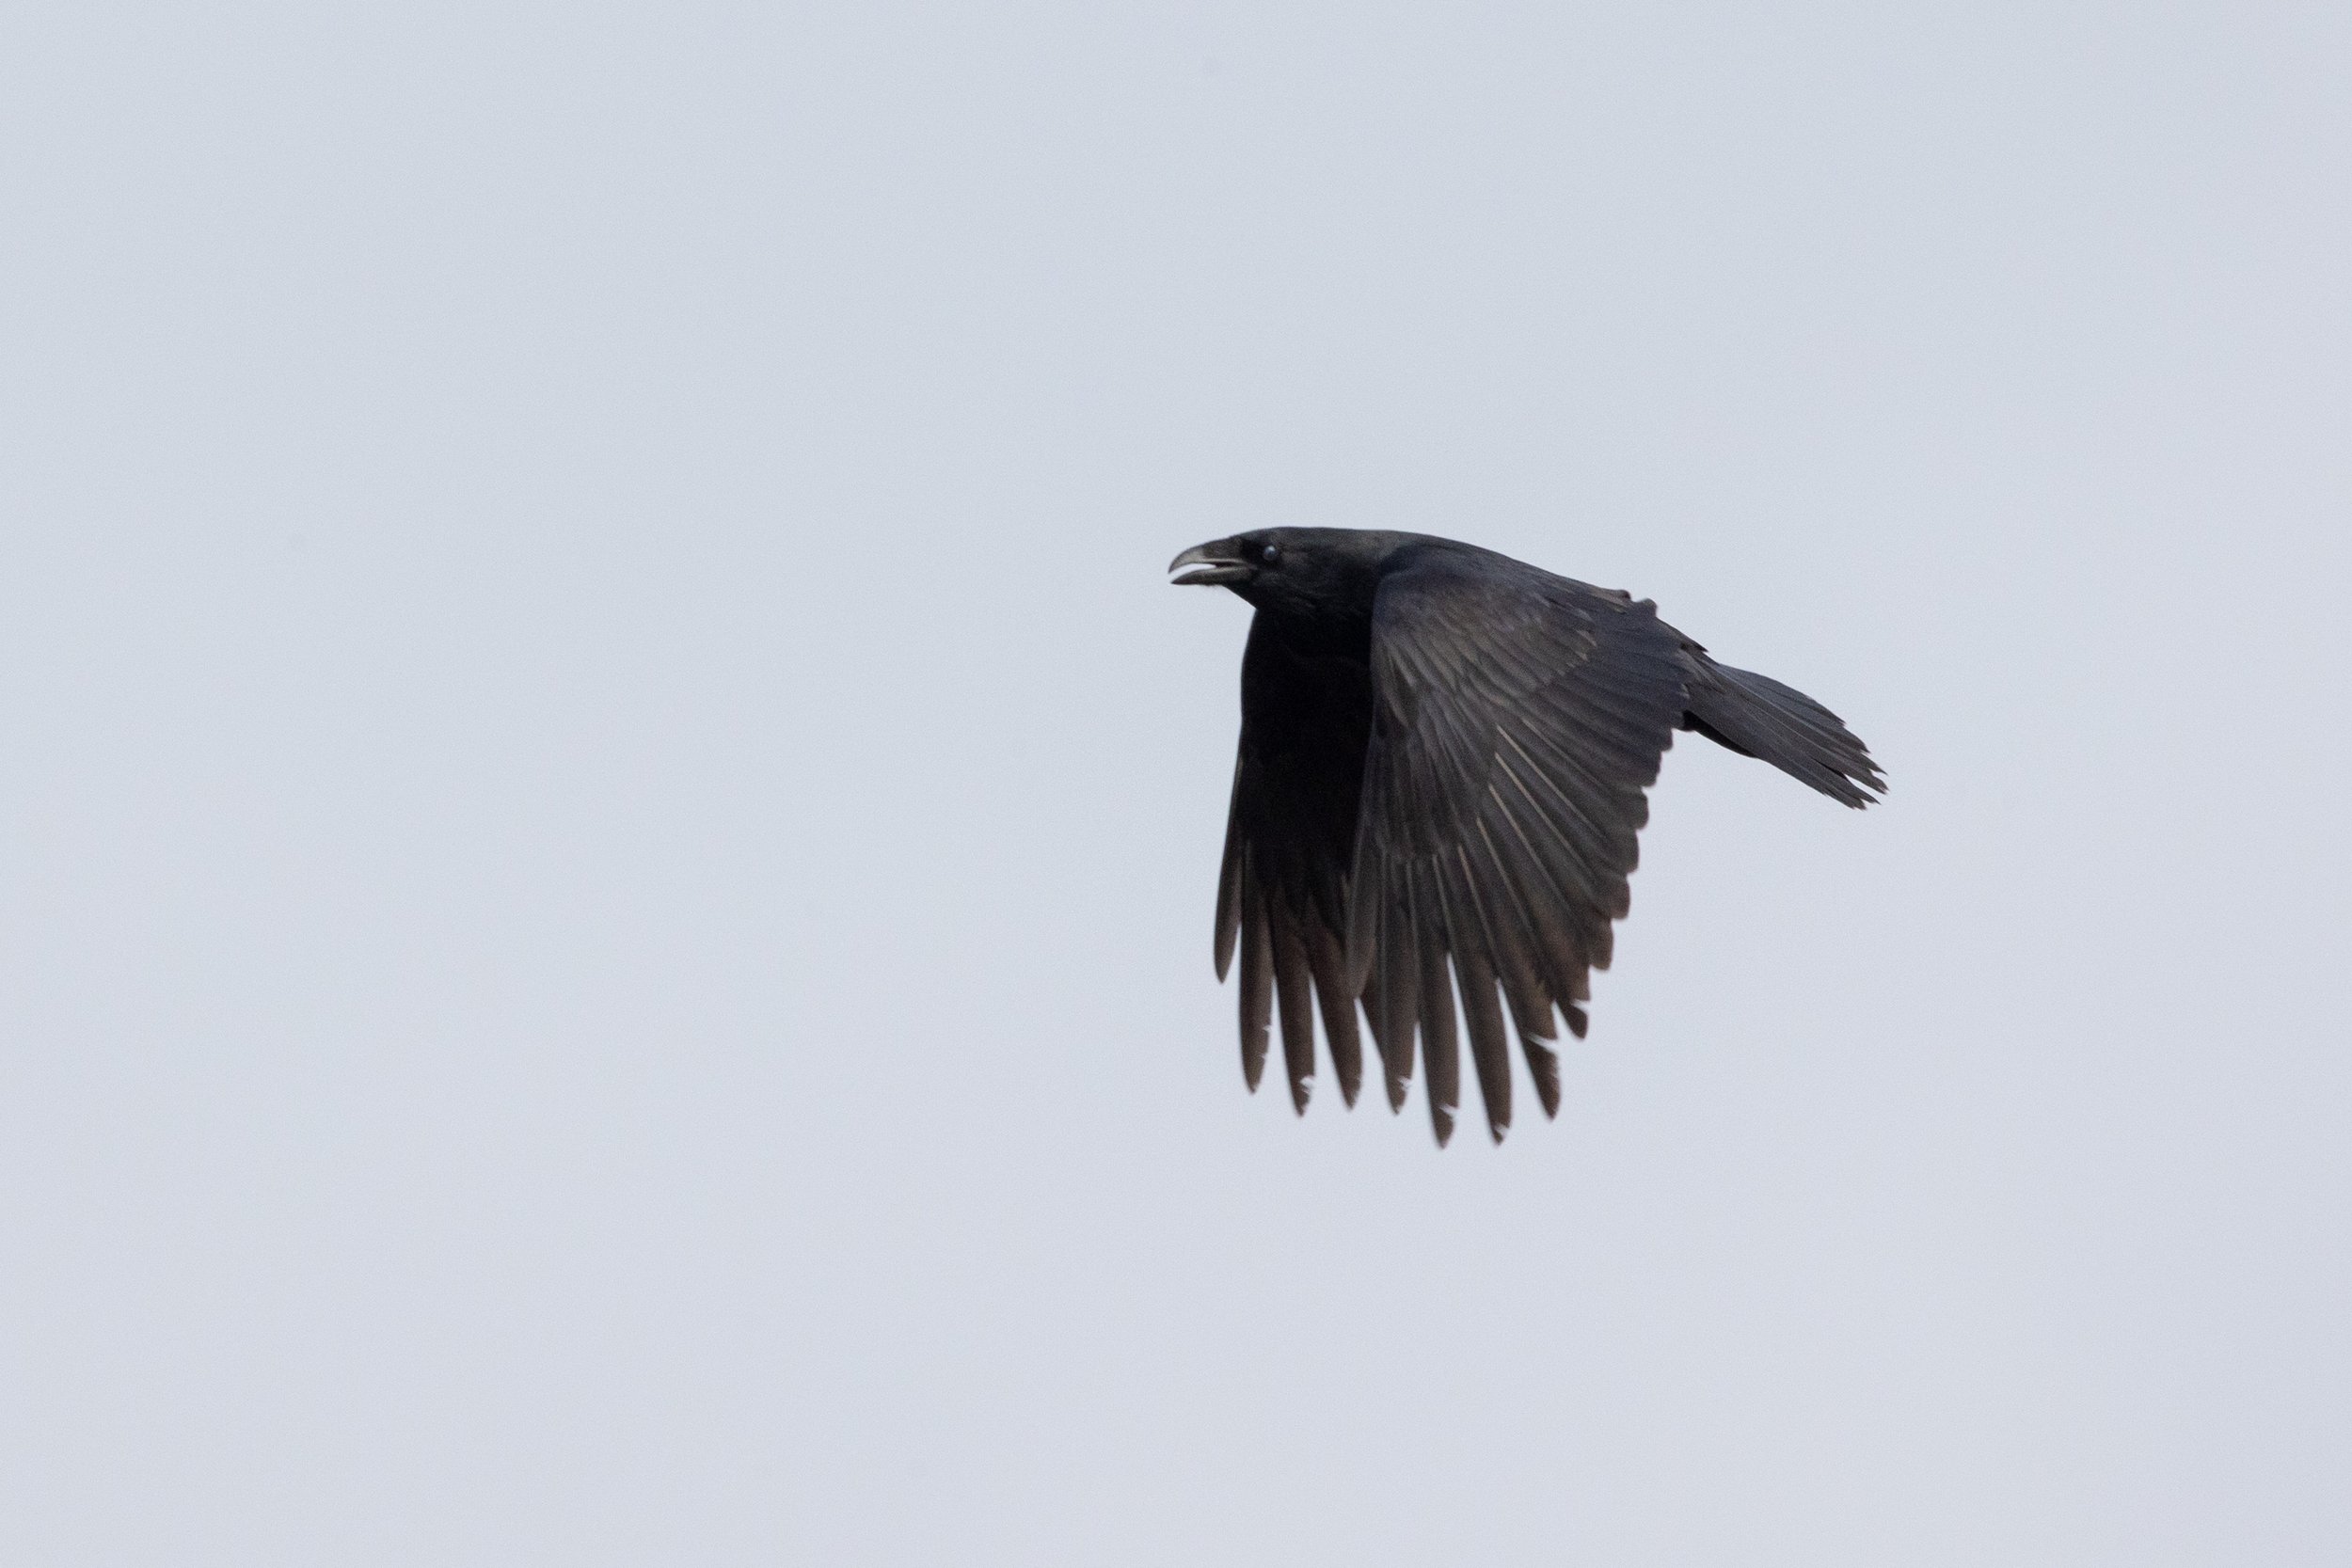 Common Ravens are a regular visitors to Hawk Ridge